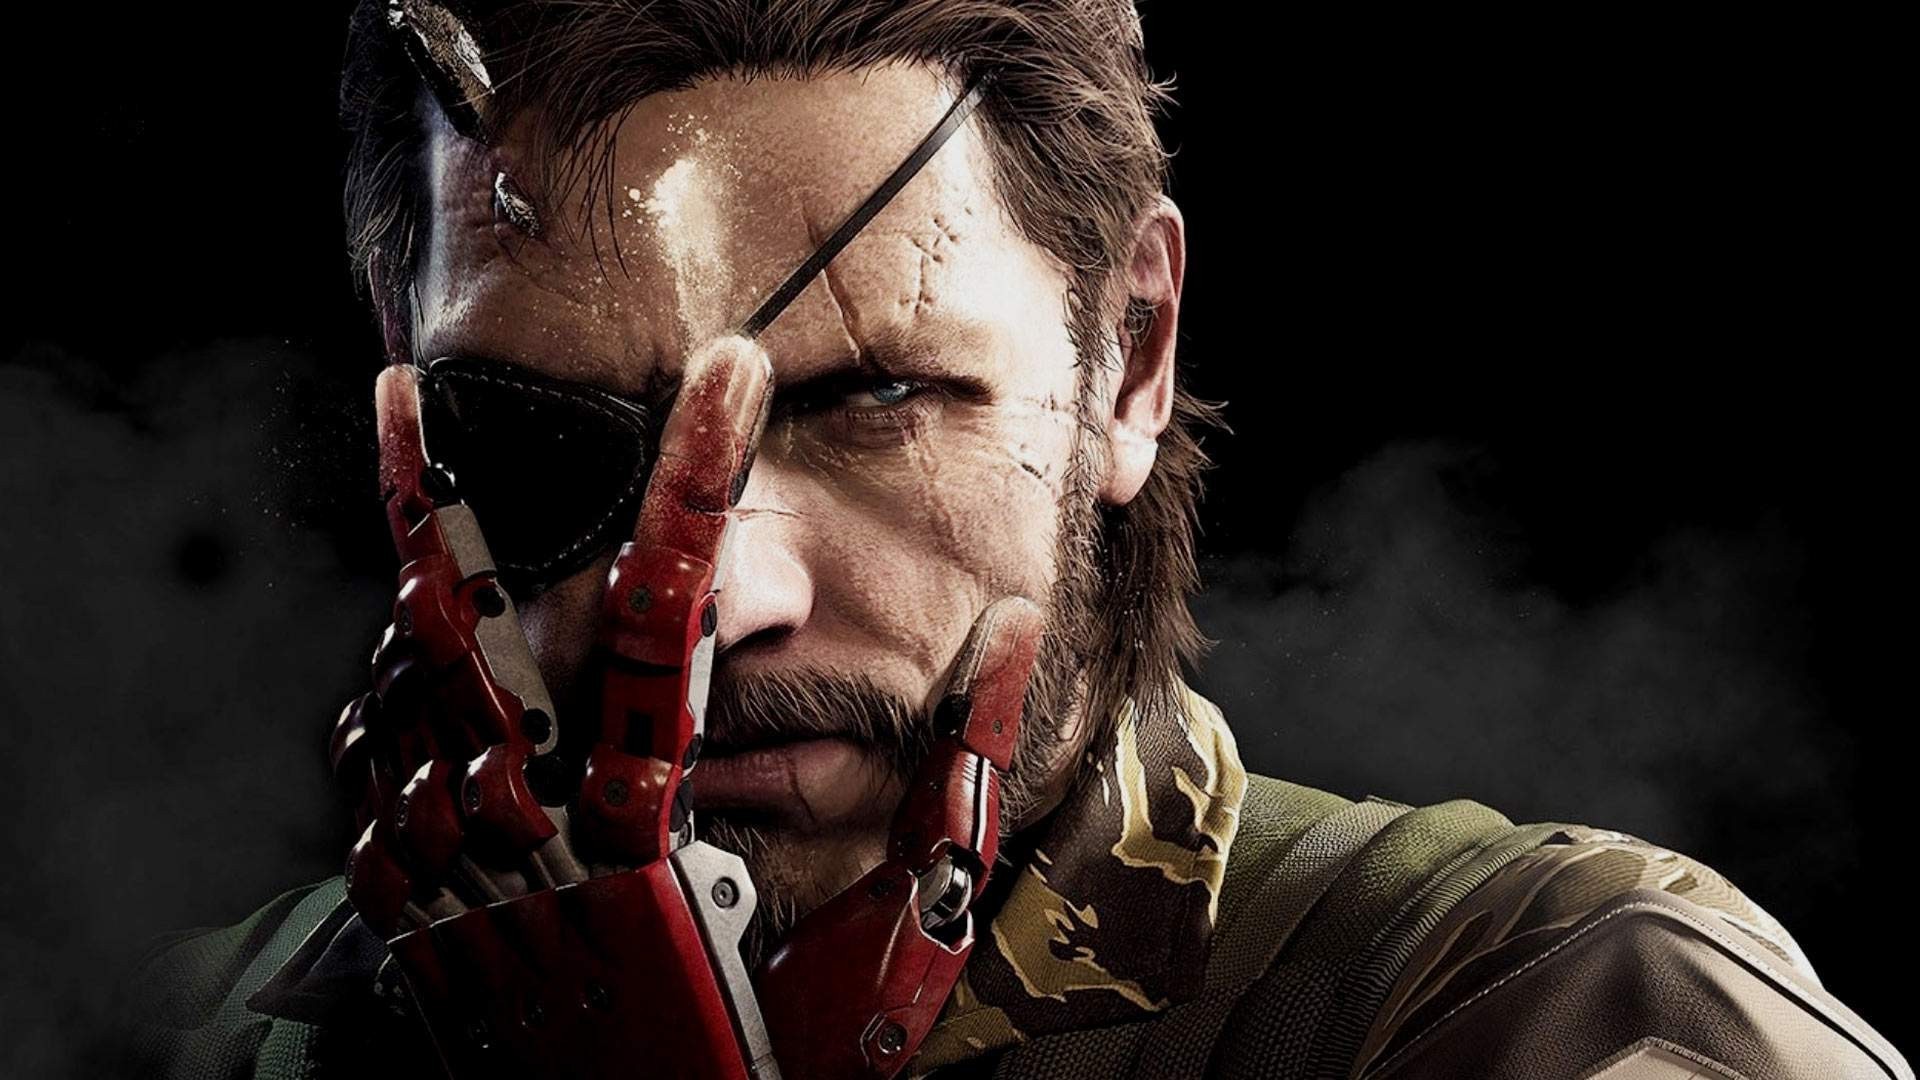 Metal Gear Solid V: The Phantom Pain, Digital Art, Video Games, Soldier, Warrior, Scars, Face, Eye Patch, Concept Art, Venom Snake Wallpaper